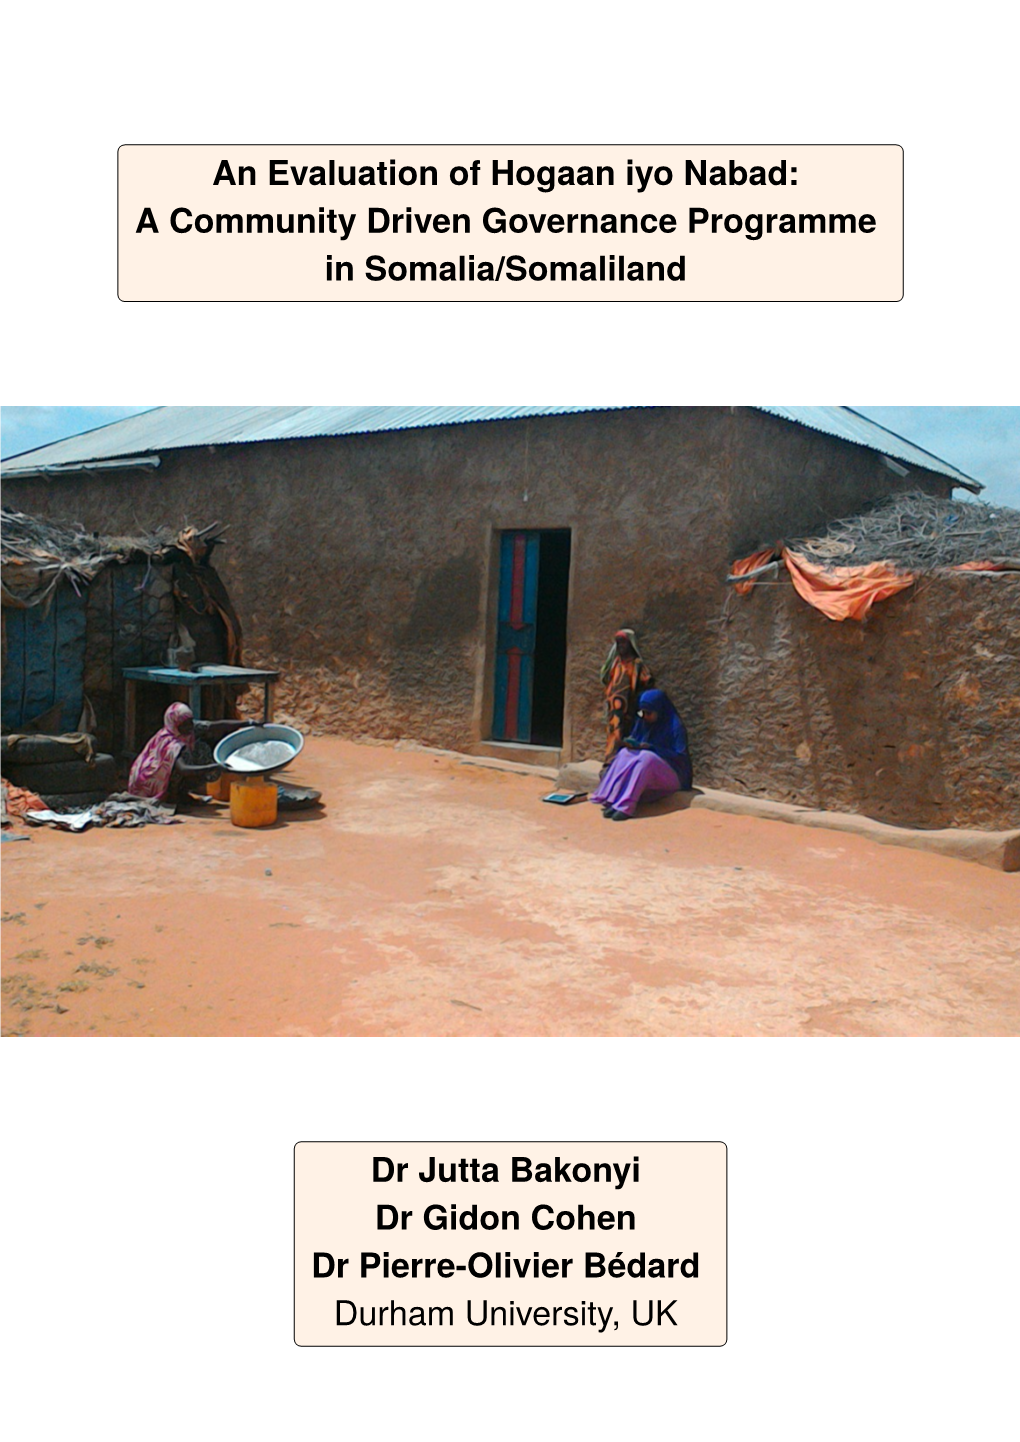 A Community Driven Governance Programme in Somalia/Somaliland